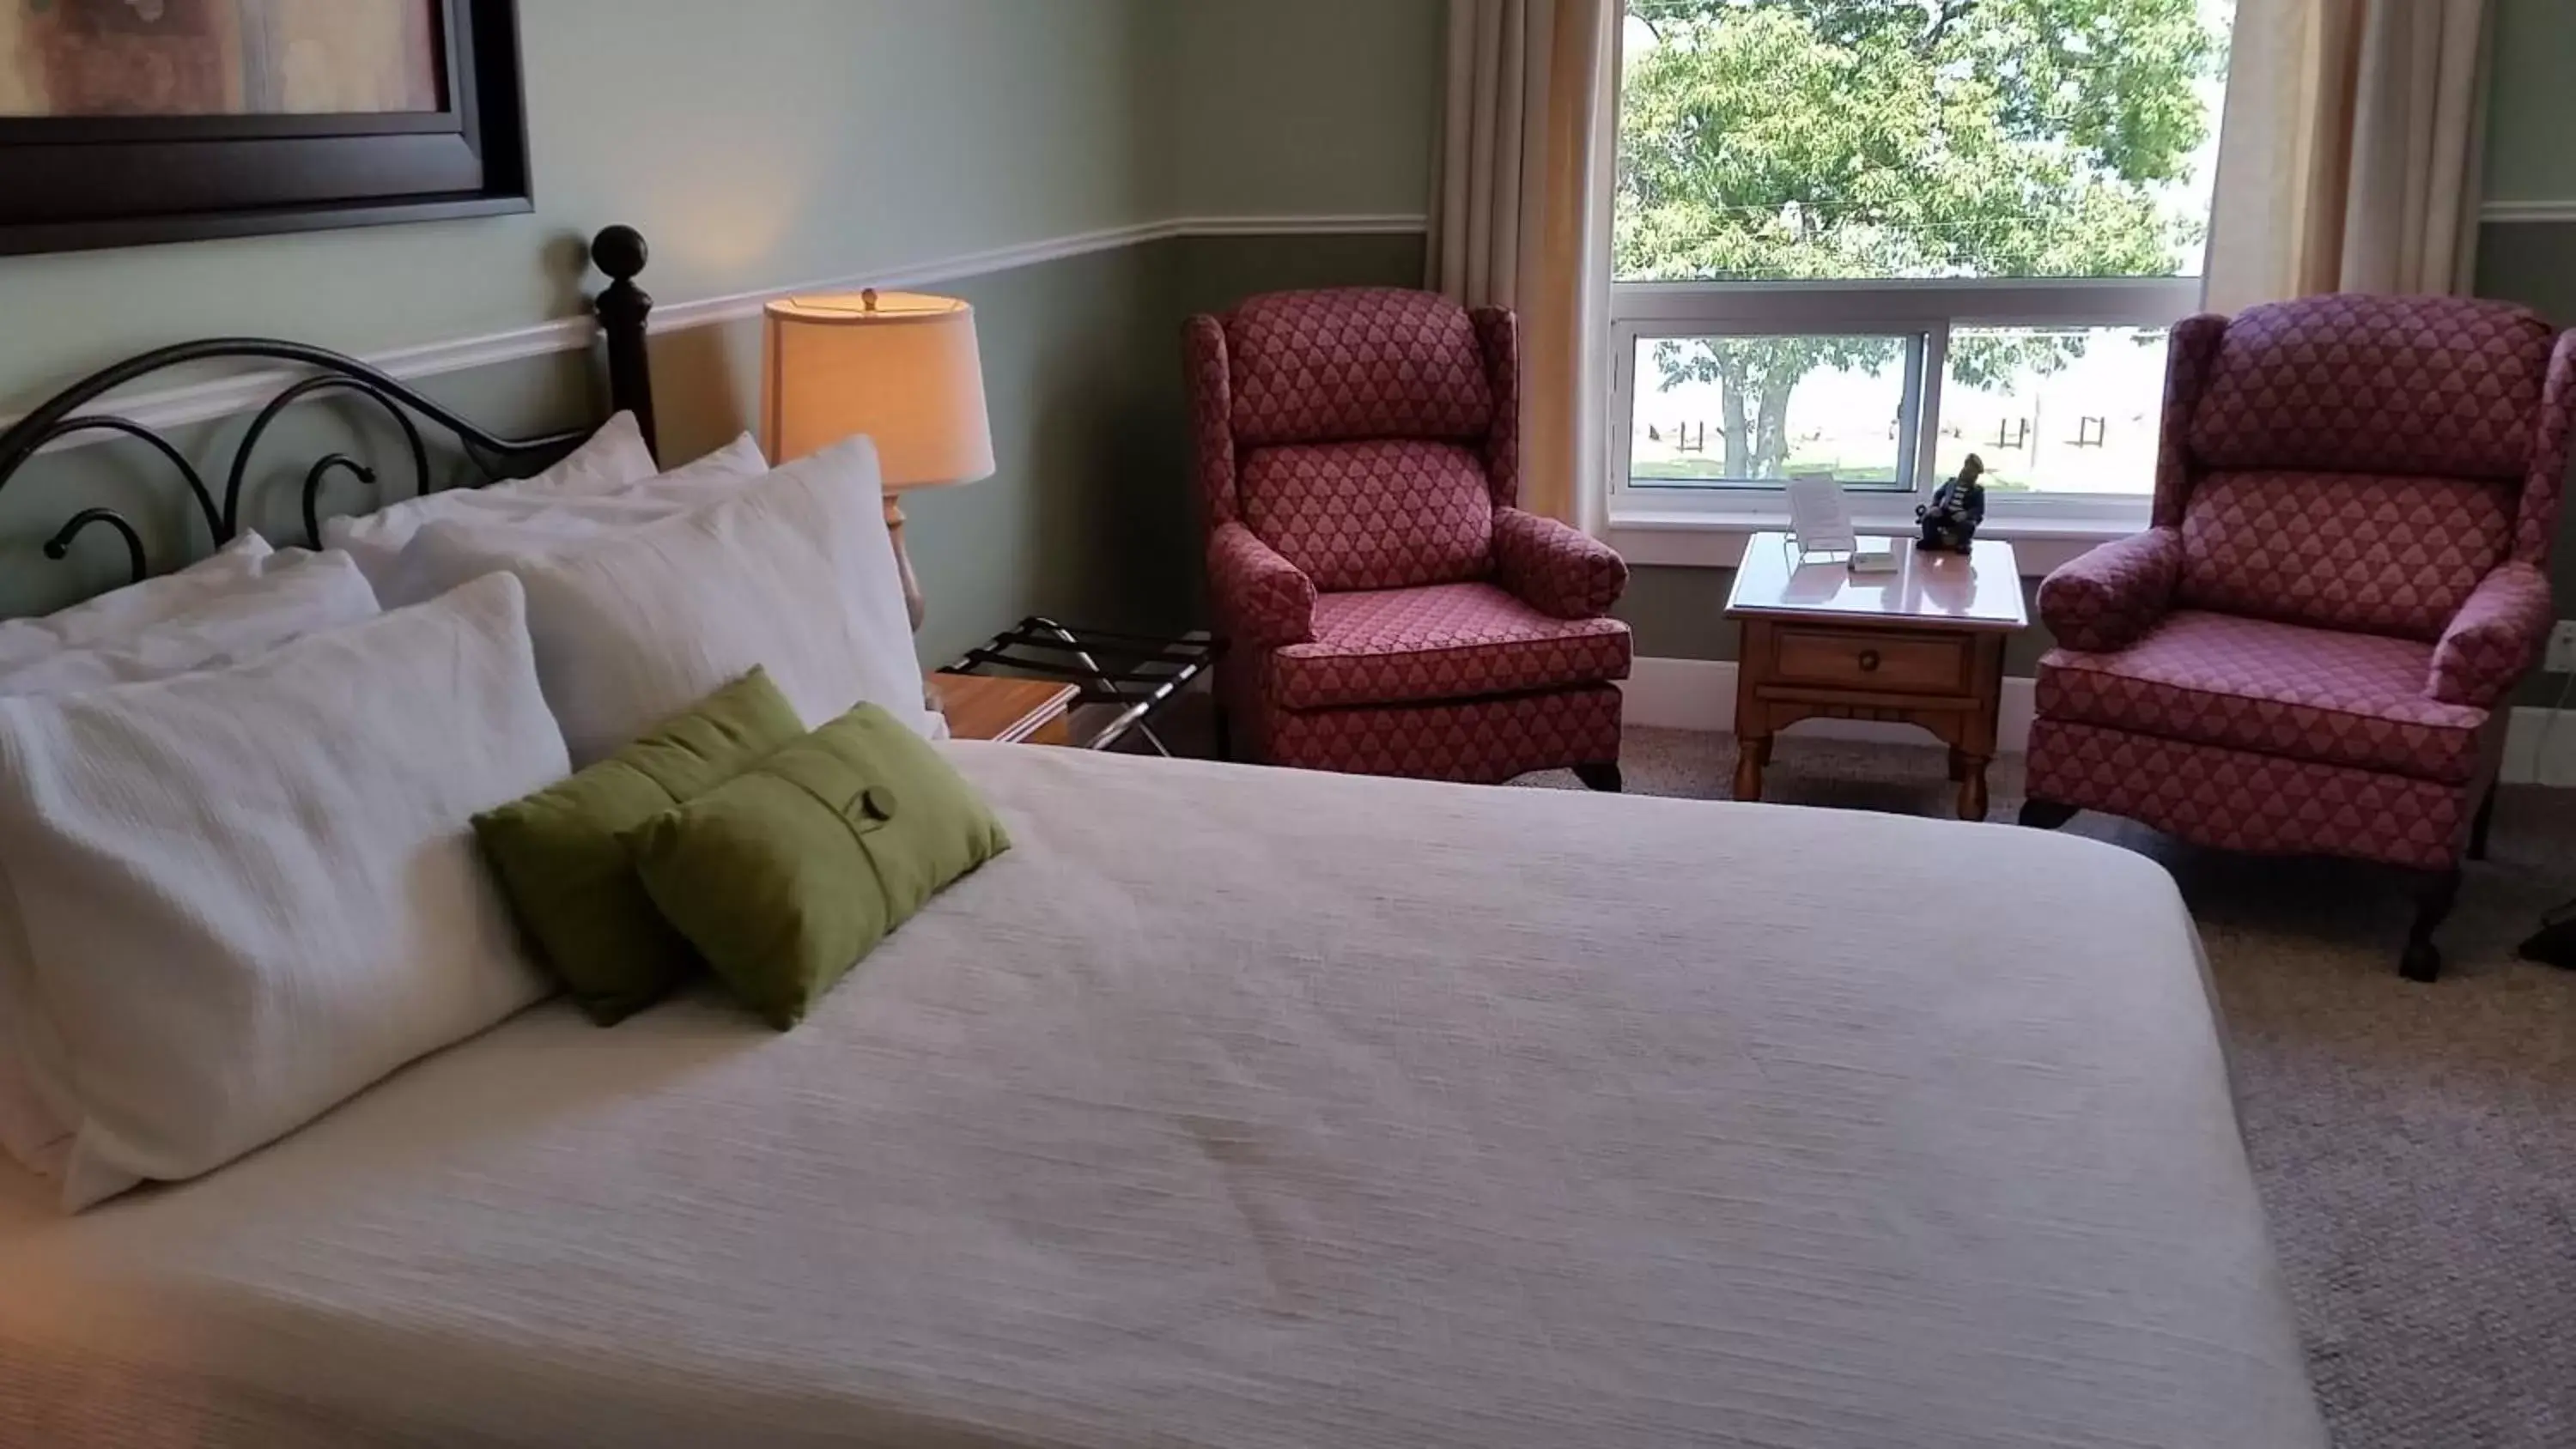 Bed, Room Photo in Bayside Inn